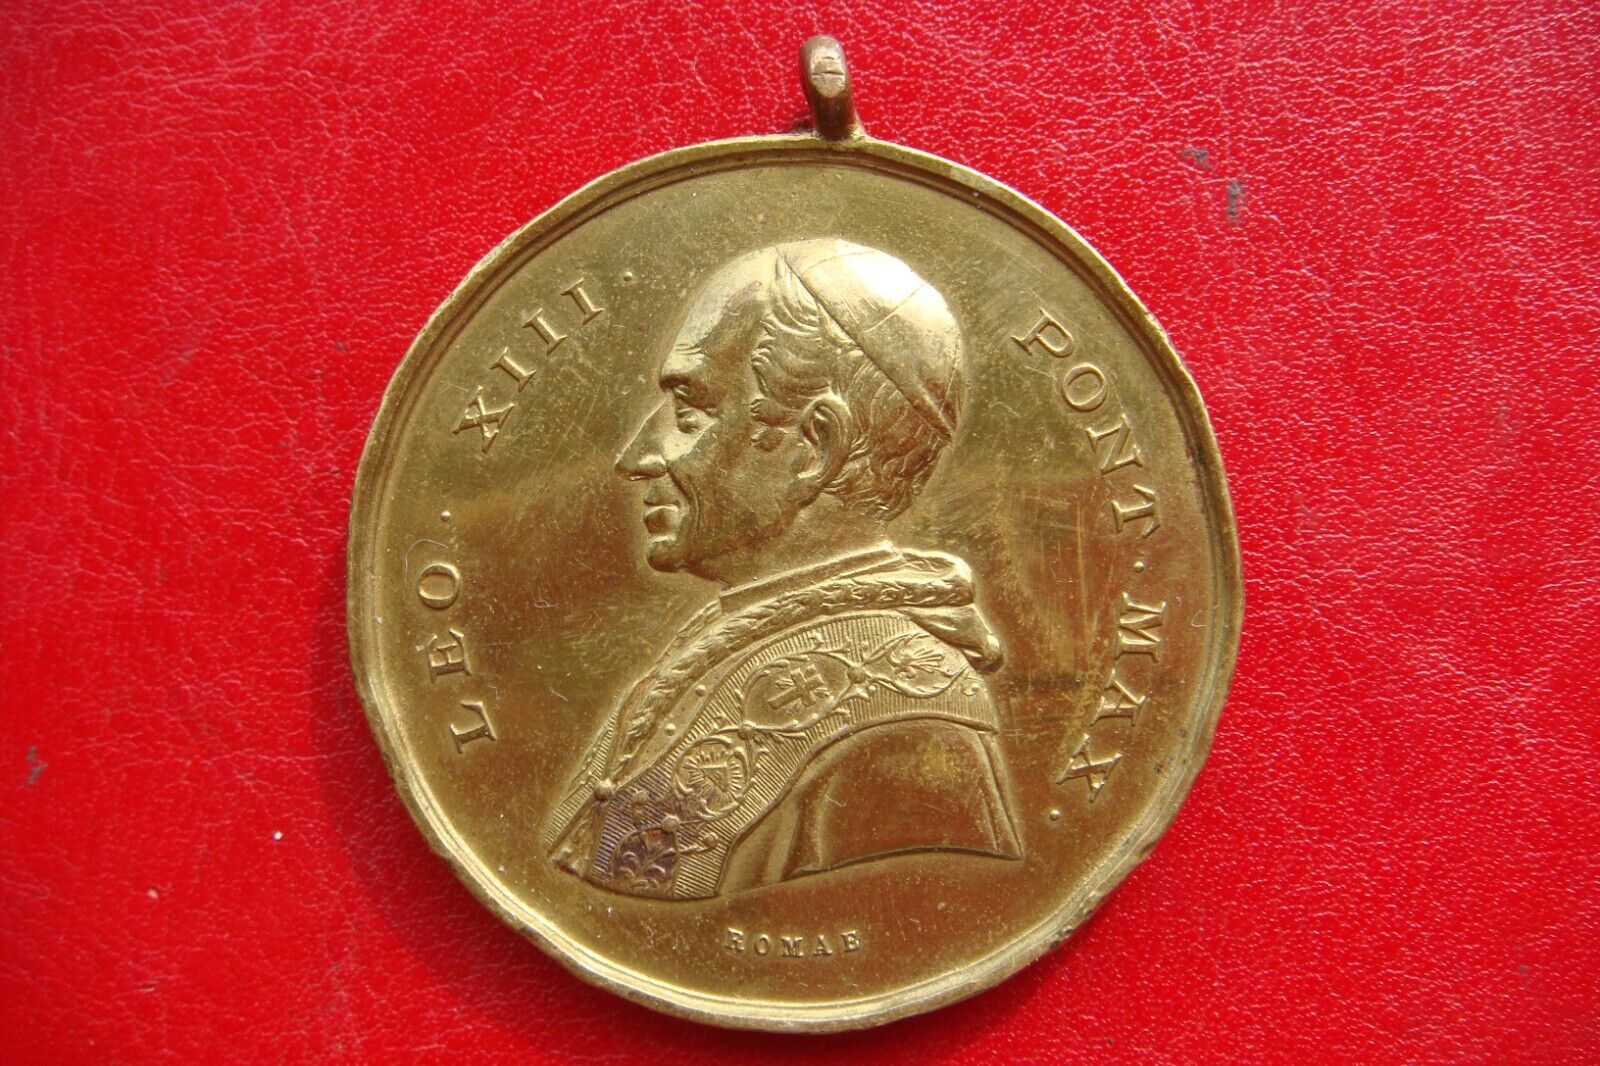 ITALY Pope LEO XIII (Vincenzo Gioacchino Pecci) Episcopal Jubilee 1893 medal